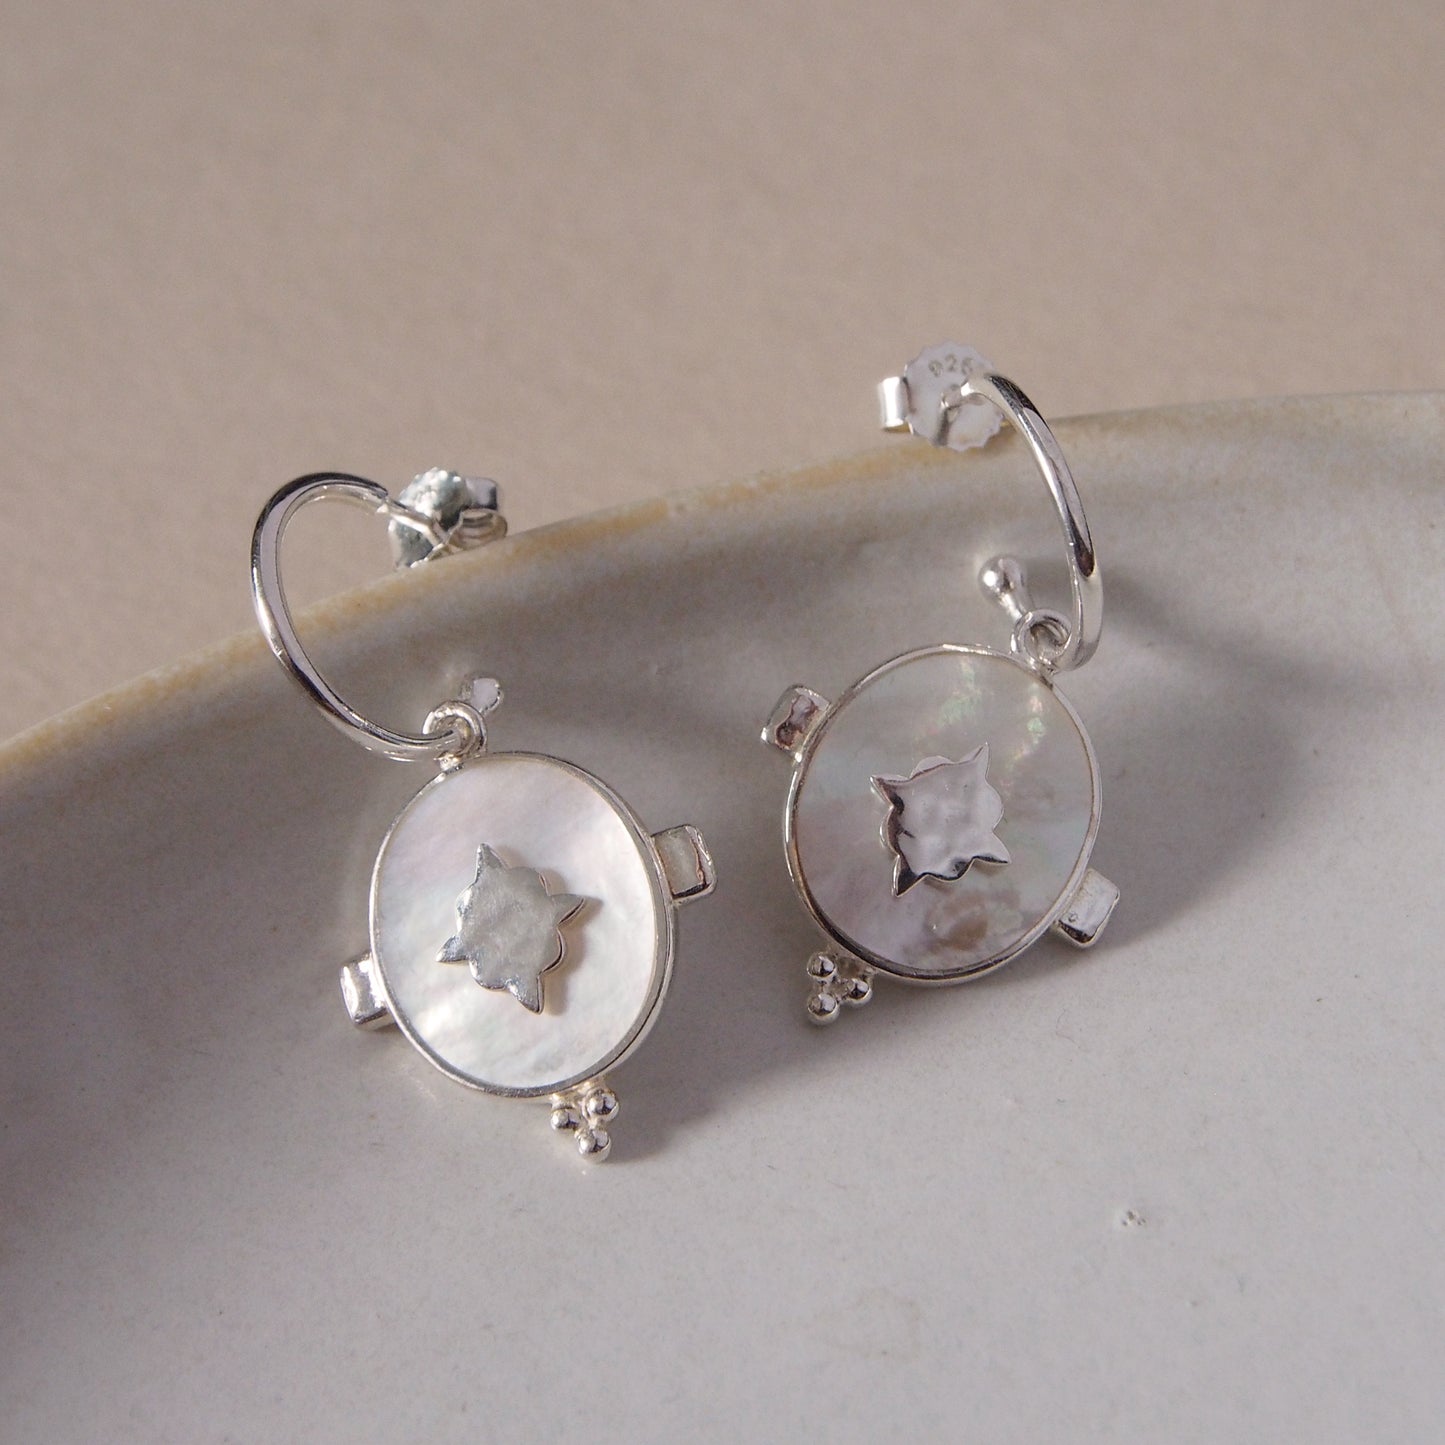 Oval Mother of Pearl Earrings in Sterling Silver